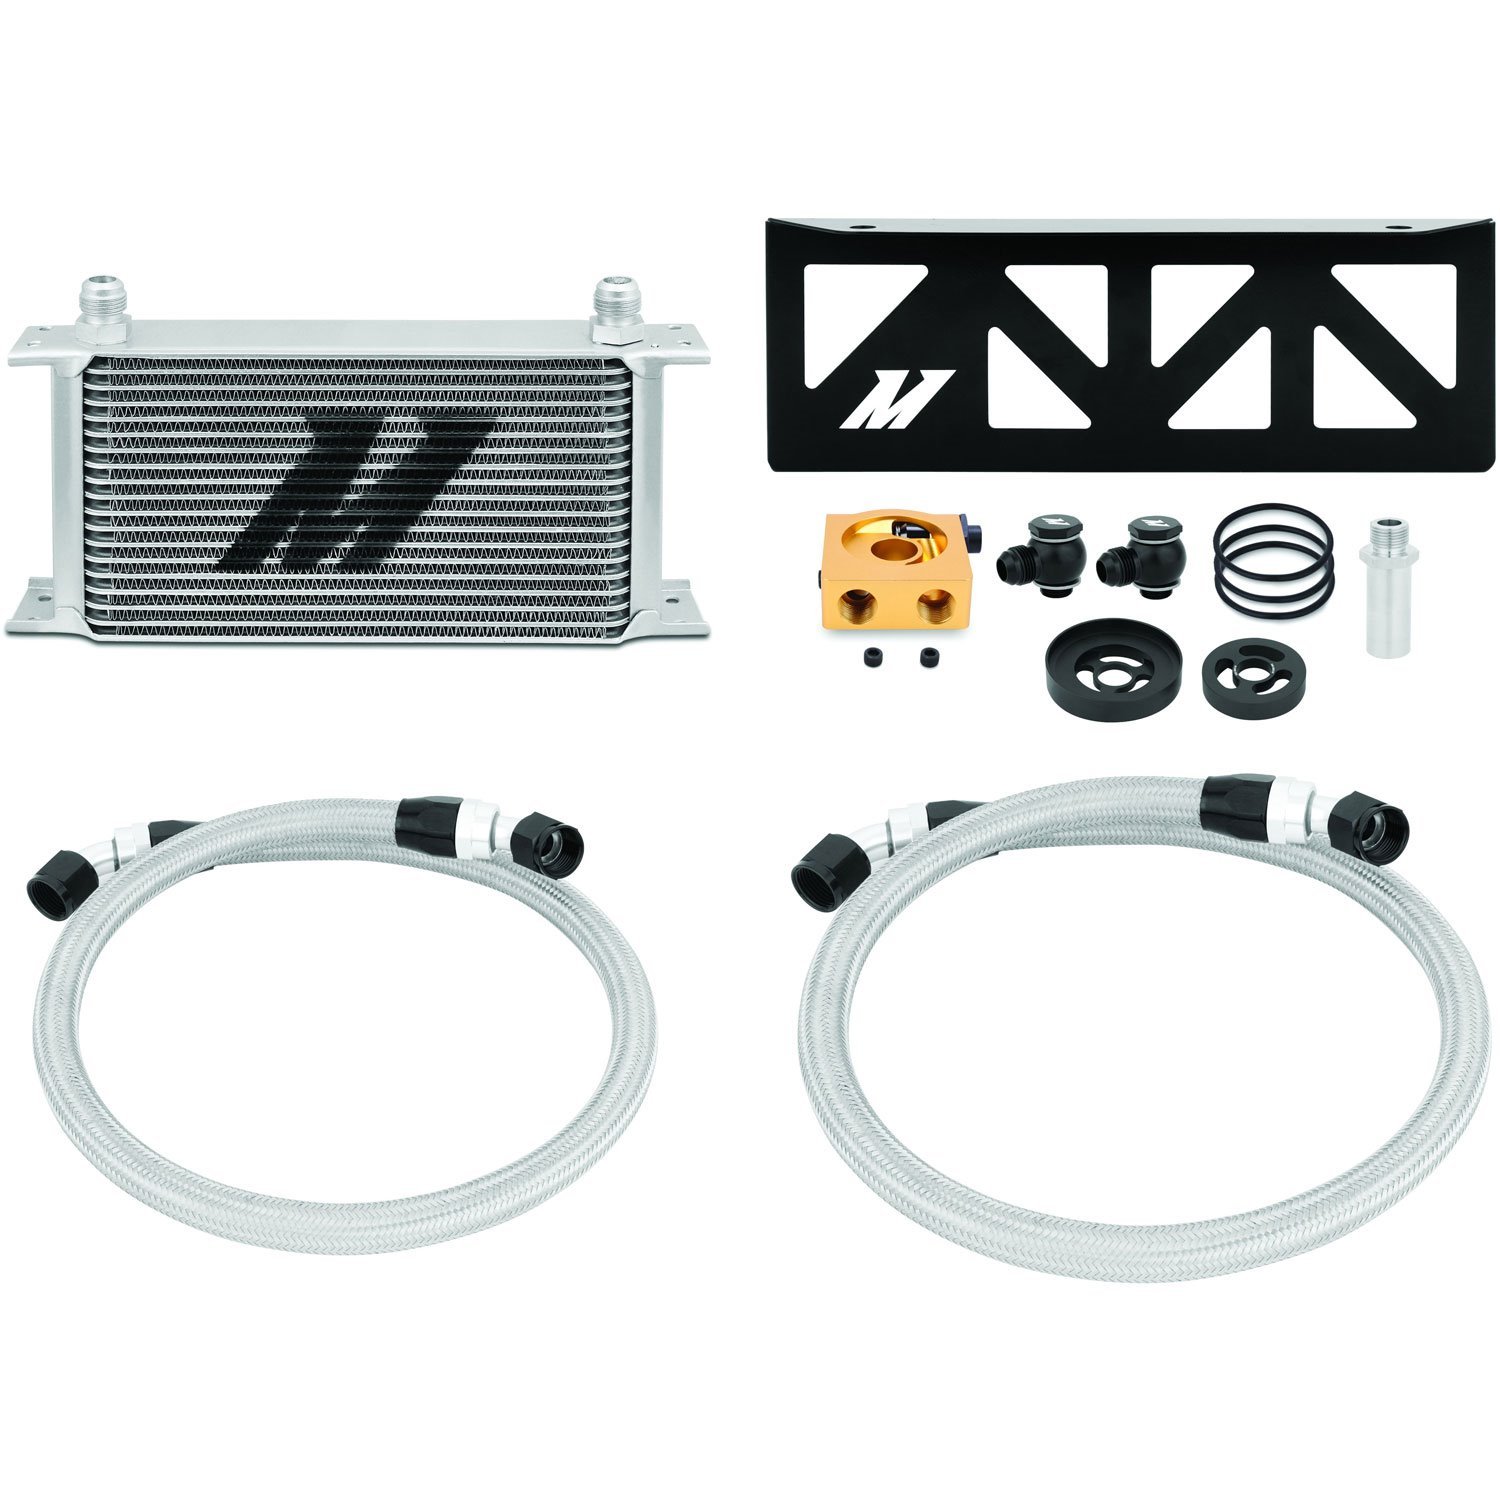 Subaru BRZ / Scion FR-S Thermostatic Oil Cooler Kit - MFG Part No. MMOC-BRZ-13T